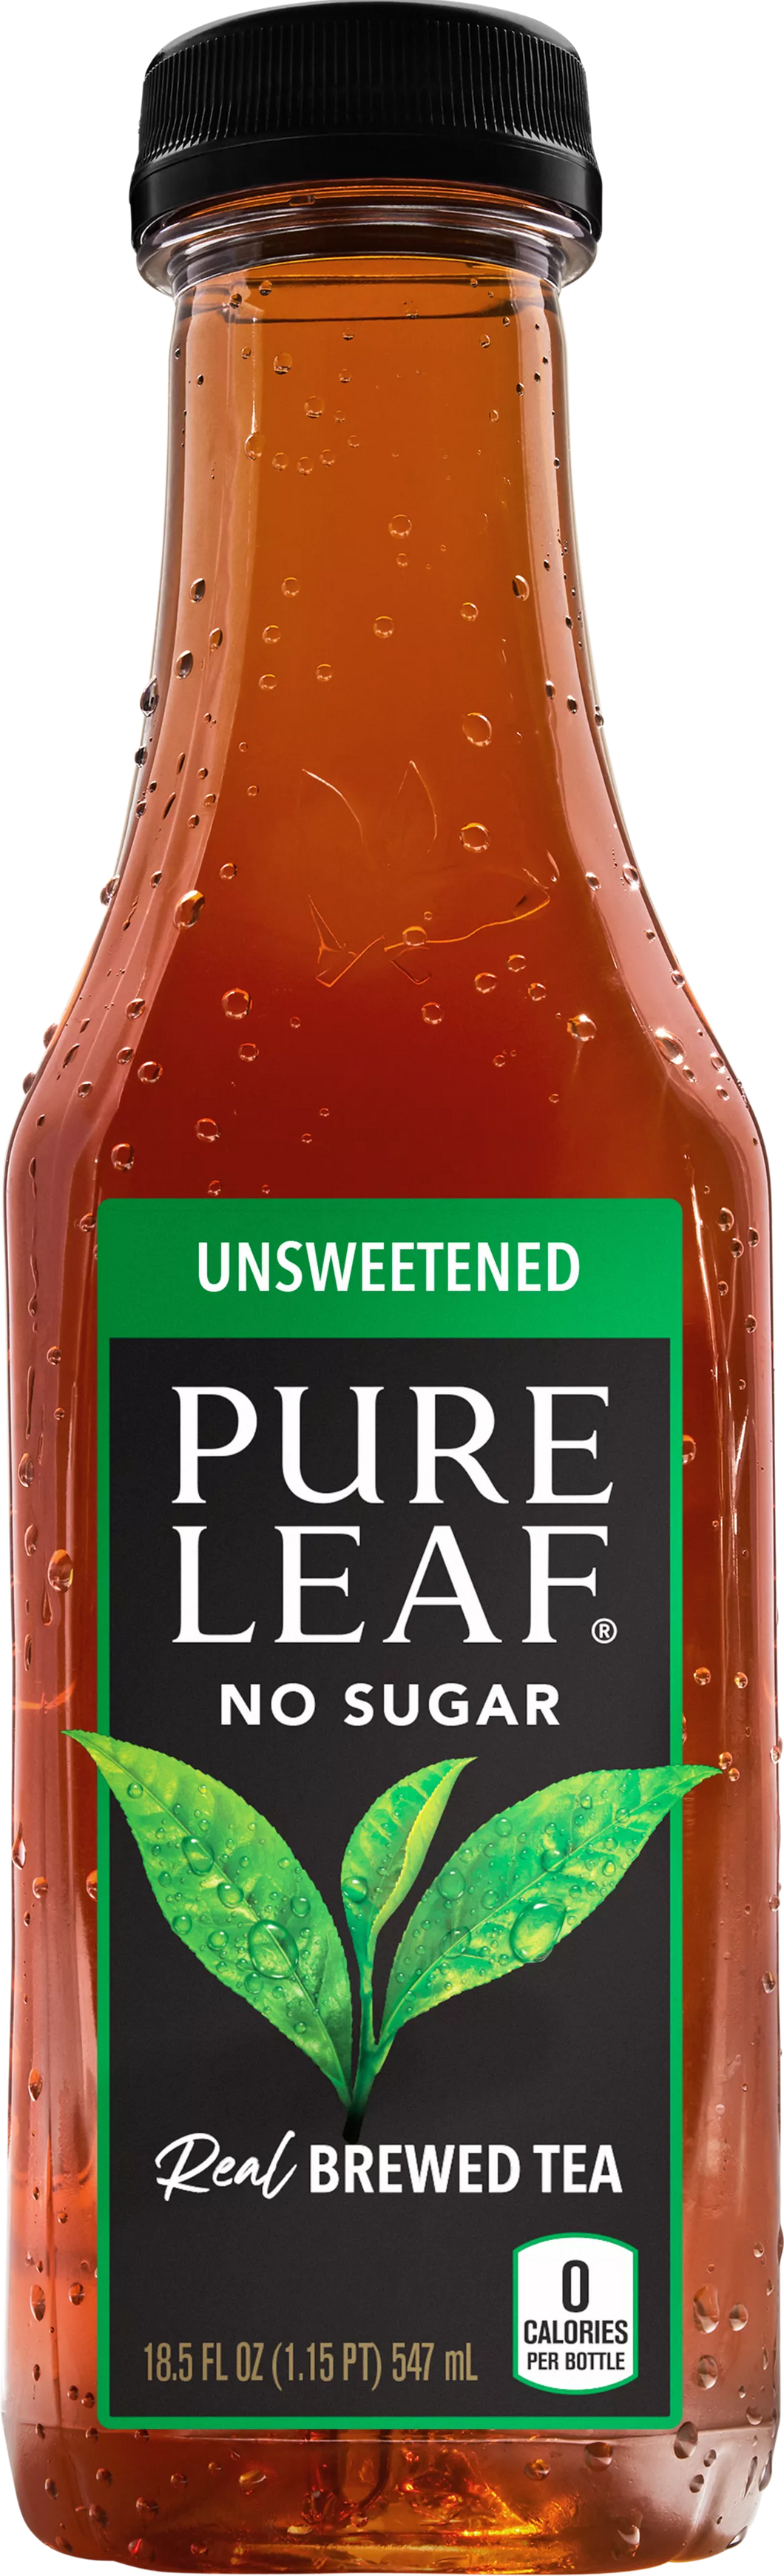 Pure Leaf Unsweeted Tea 18.5 oz.